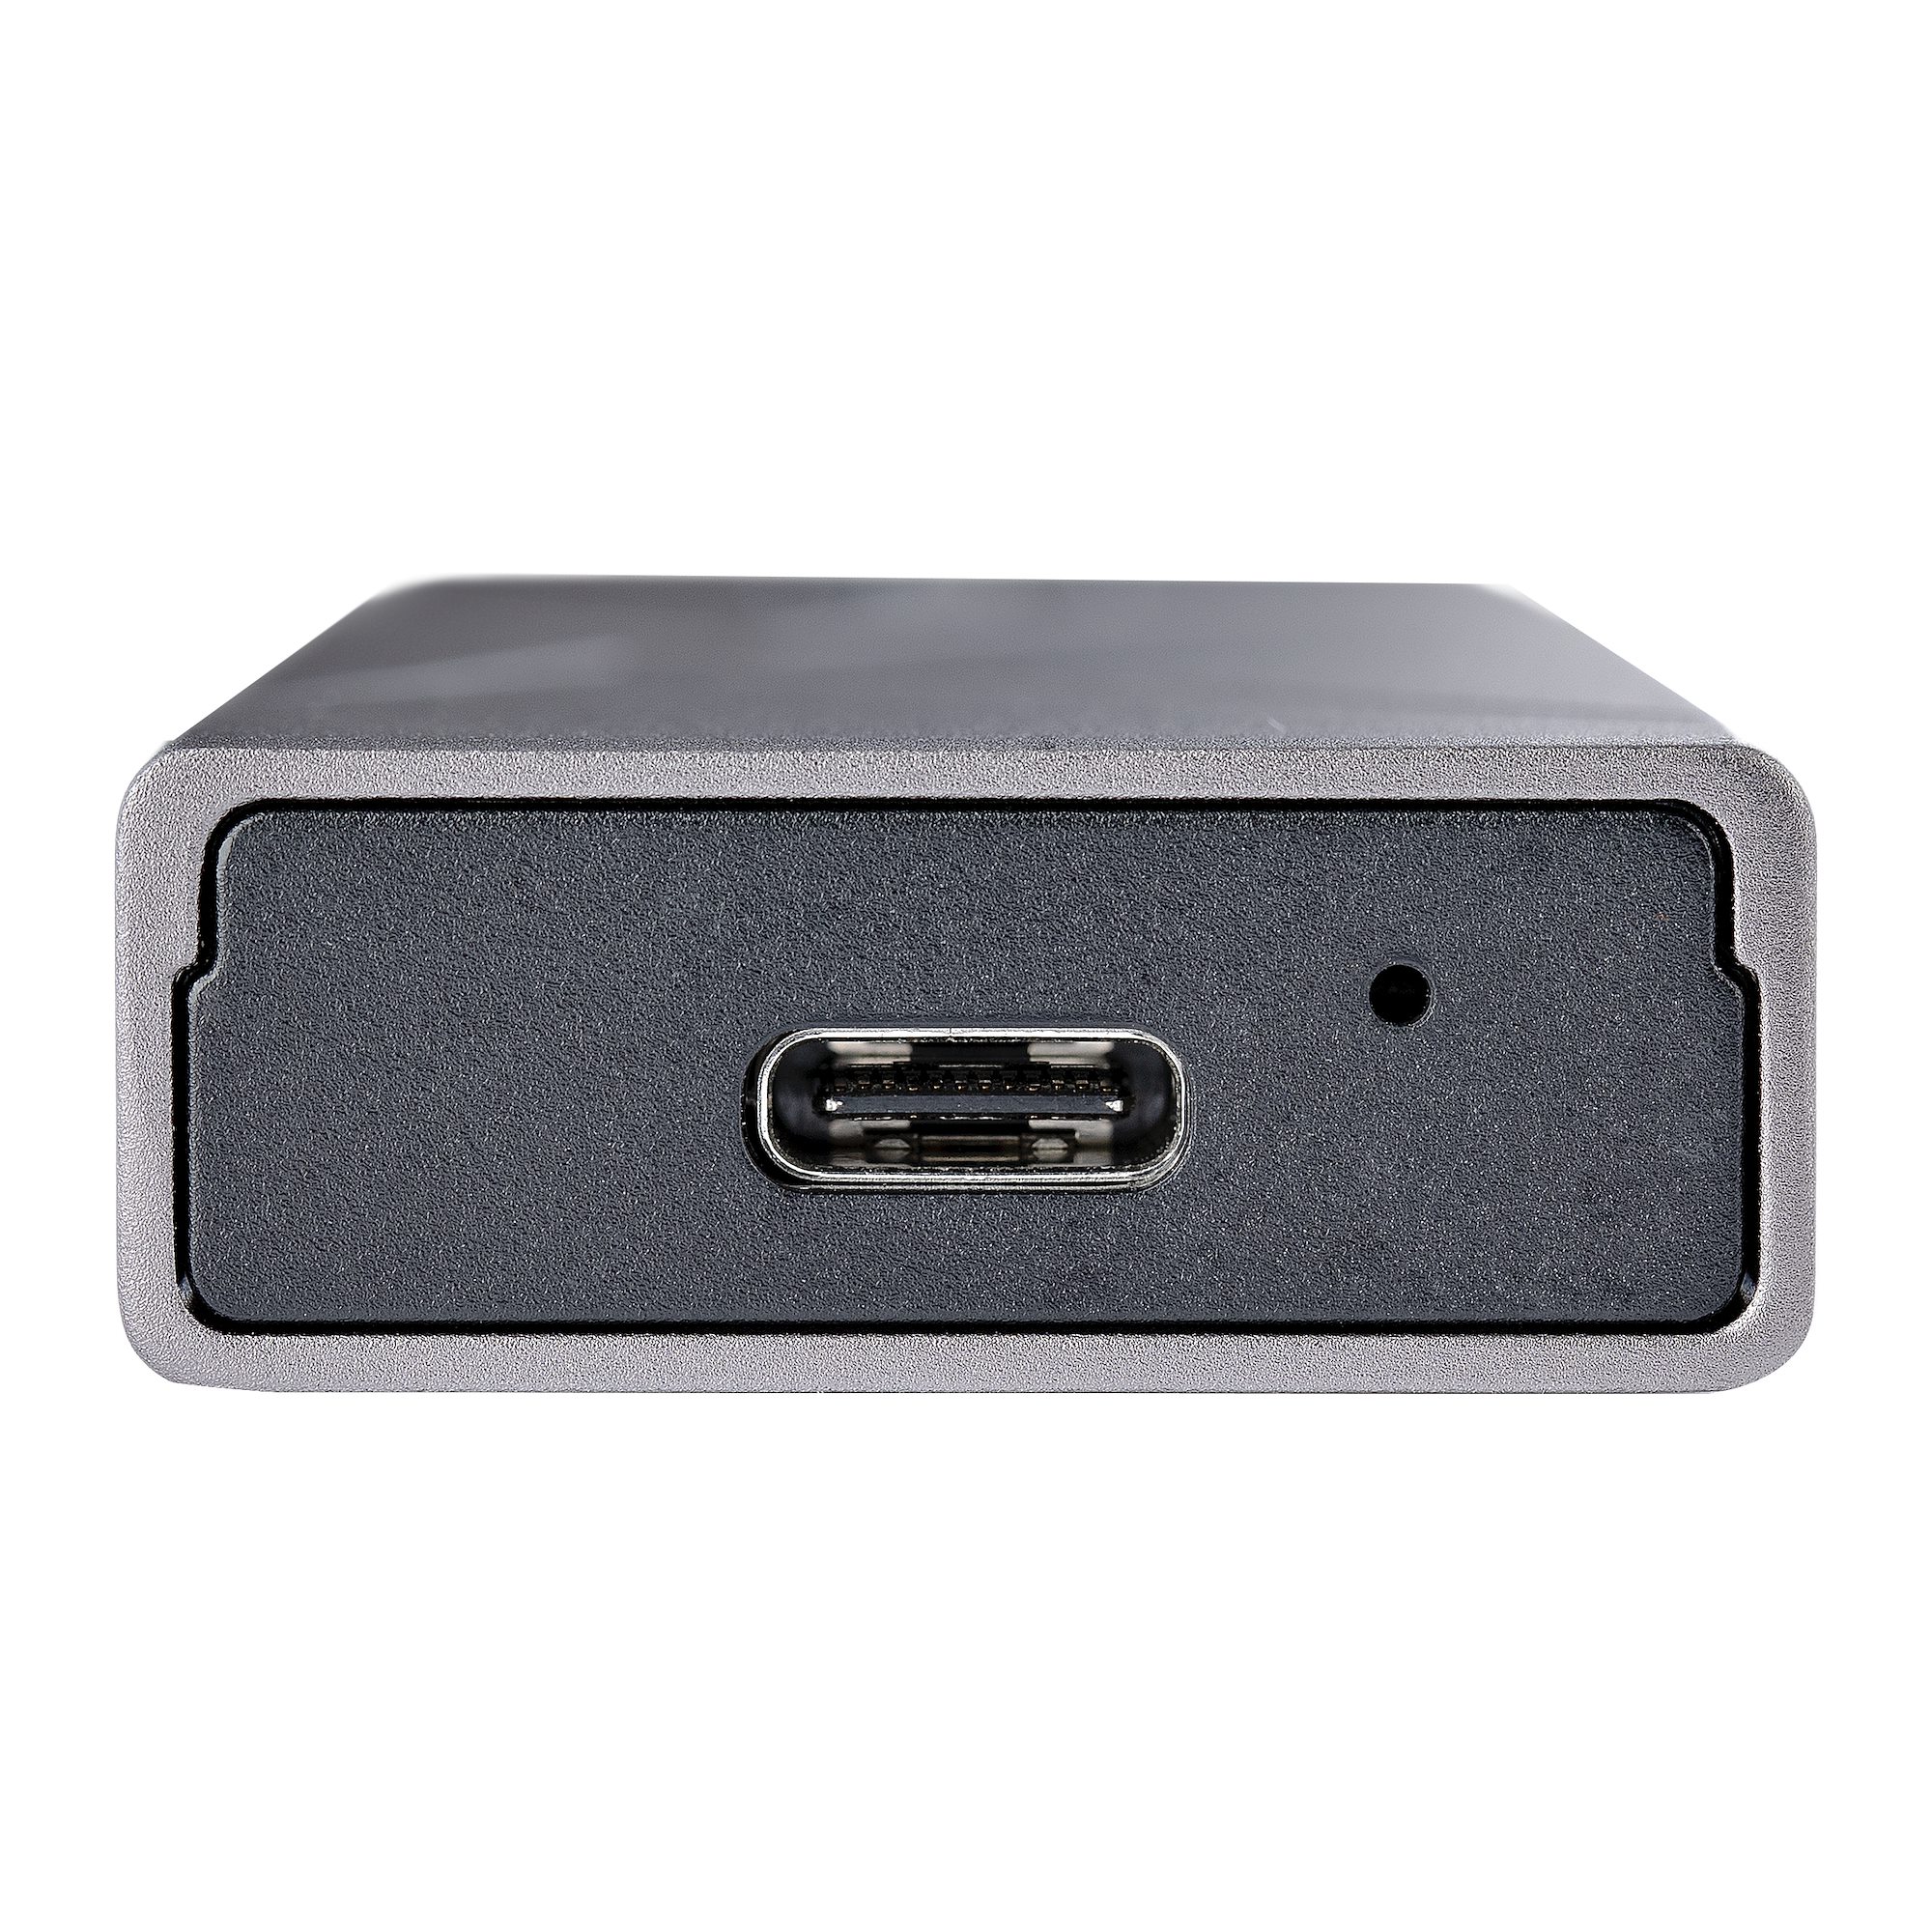 Boîtier SSD - M2 Nvme M-key Pcie Mobile Hard Drive Enclosure Box